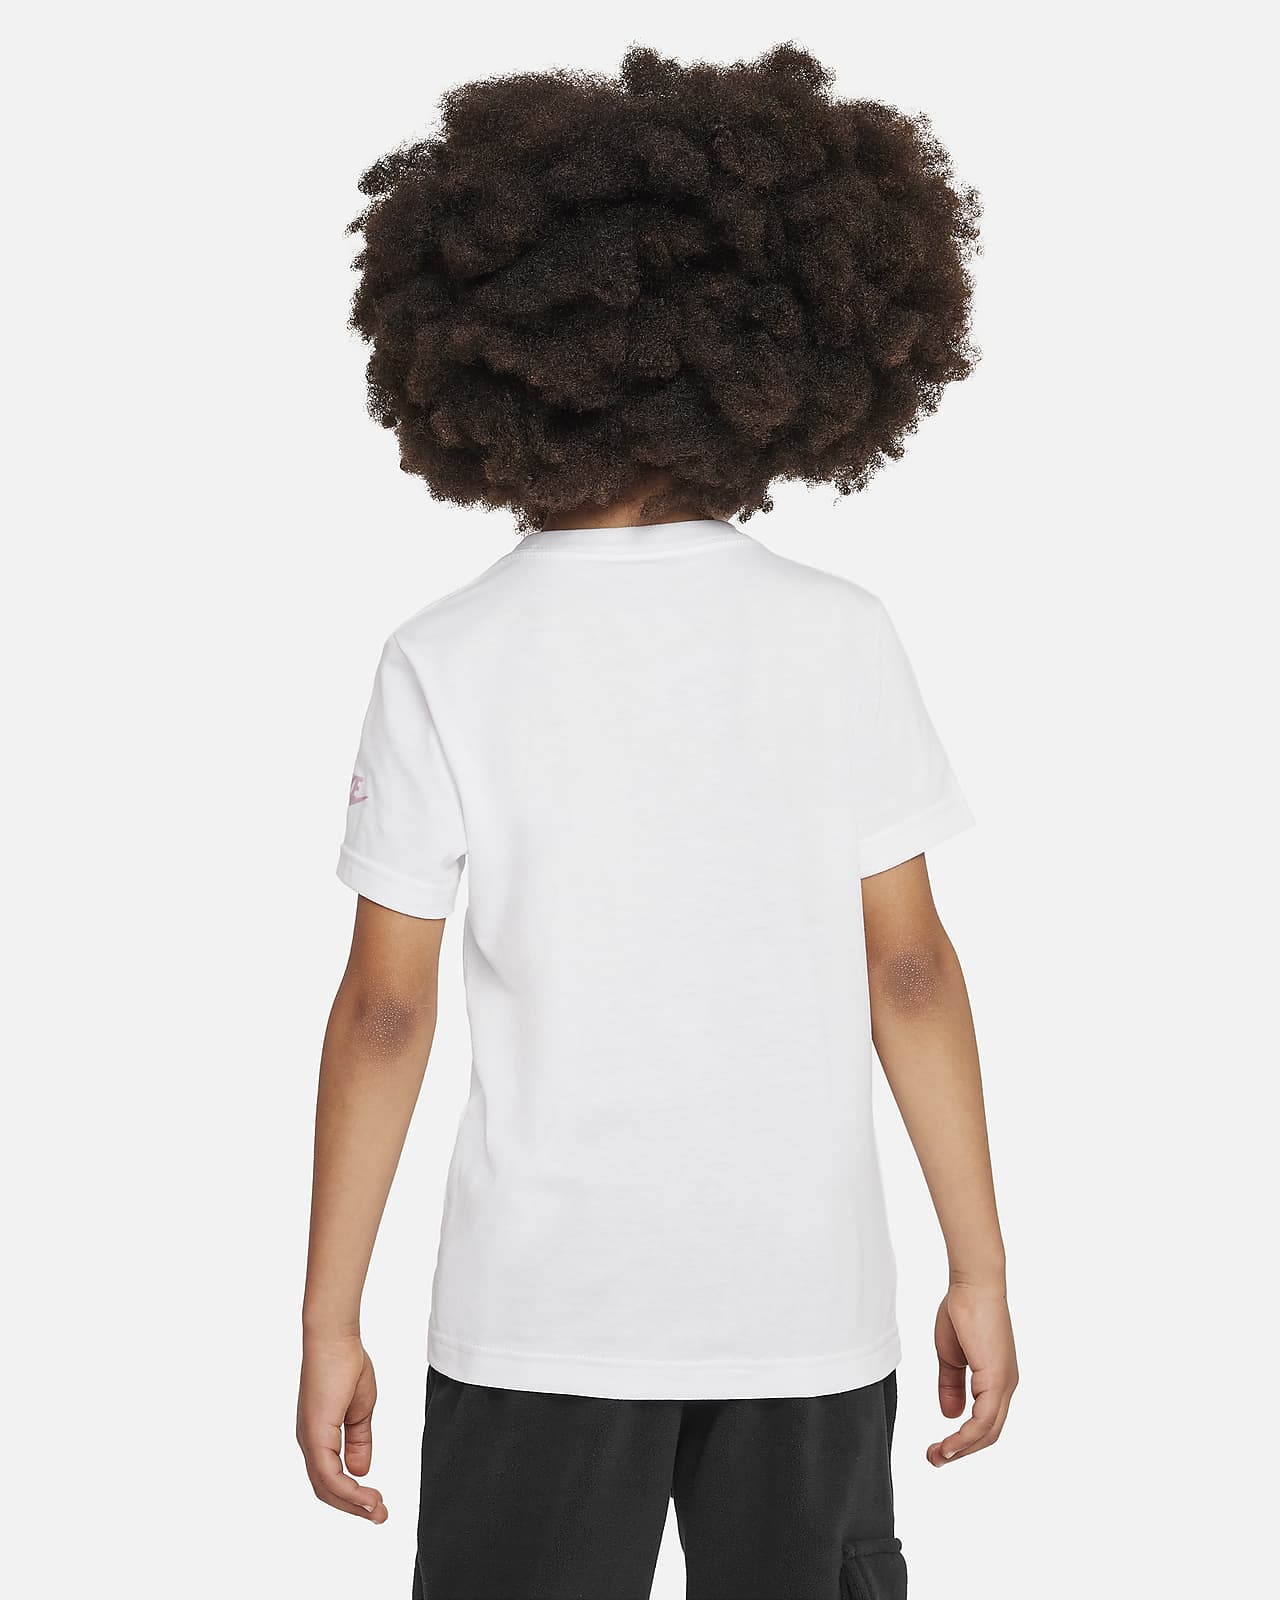 Kids\' Graphic T-Shirt. Little Futura Nike